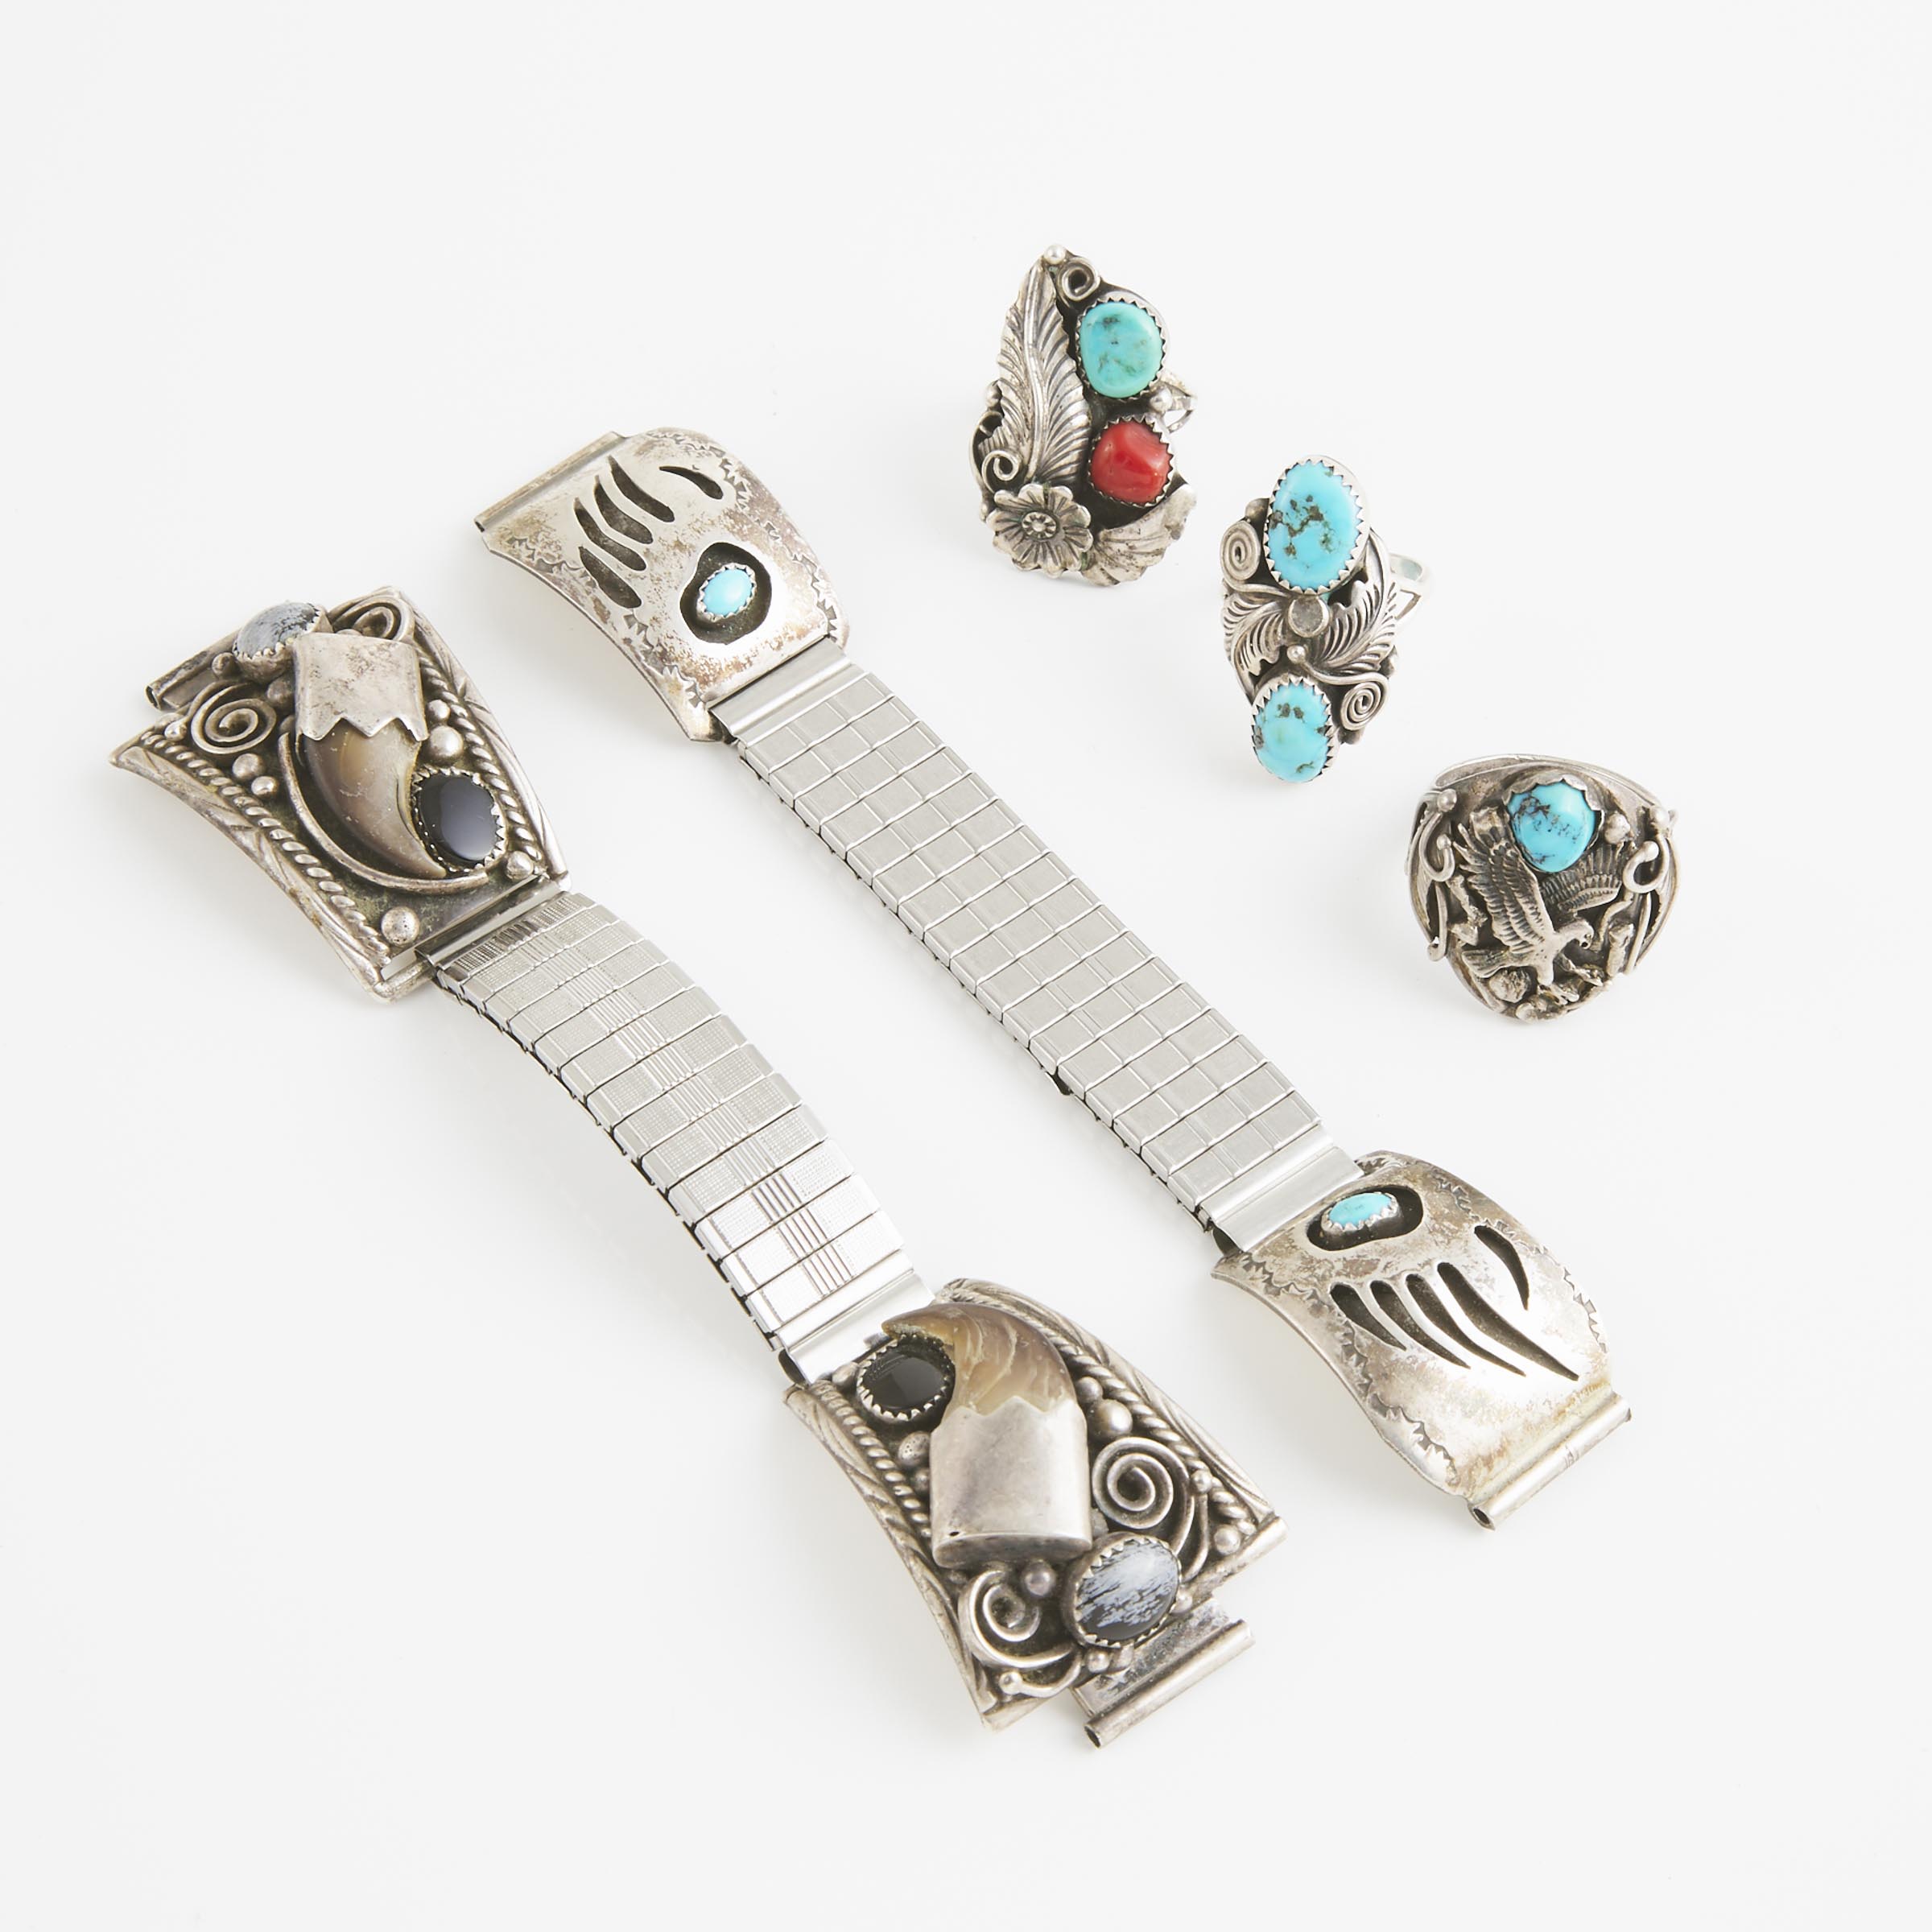 Small Quantity Of Navajo Silver Jewellery